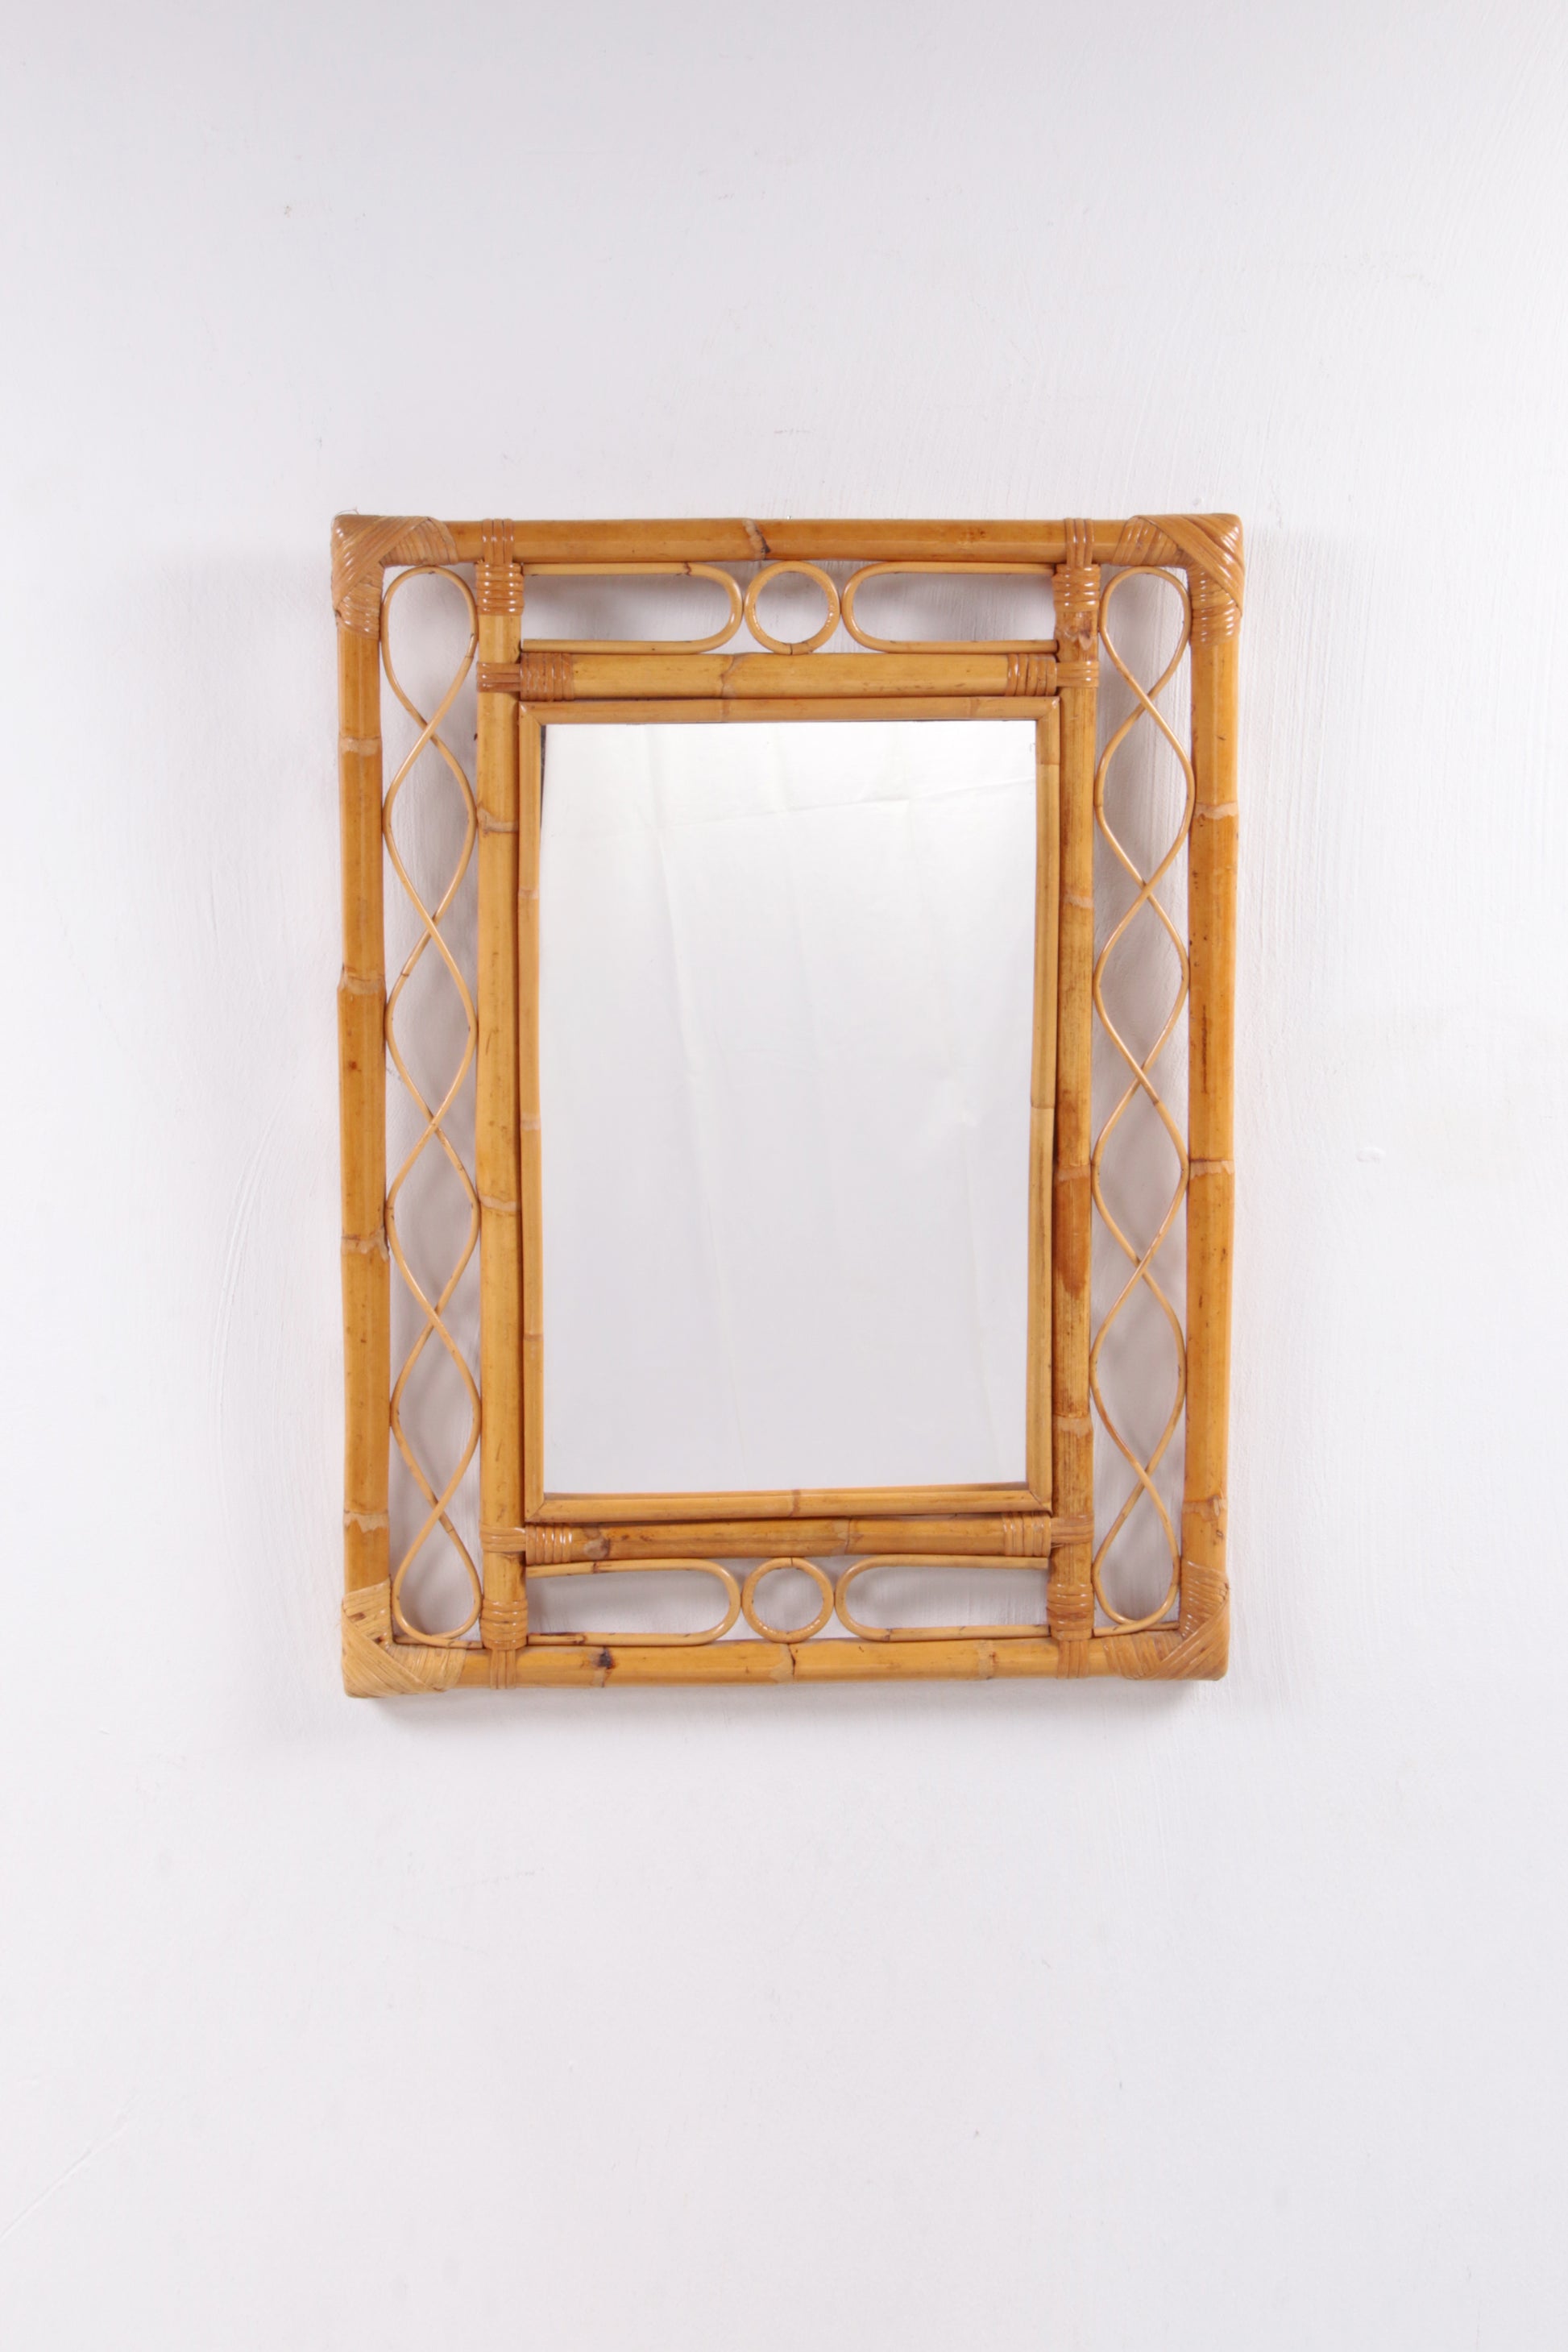 Authentieke Franse bamboe spiegel afkomstig uit Frankrijk